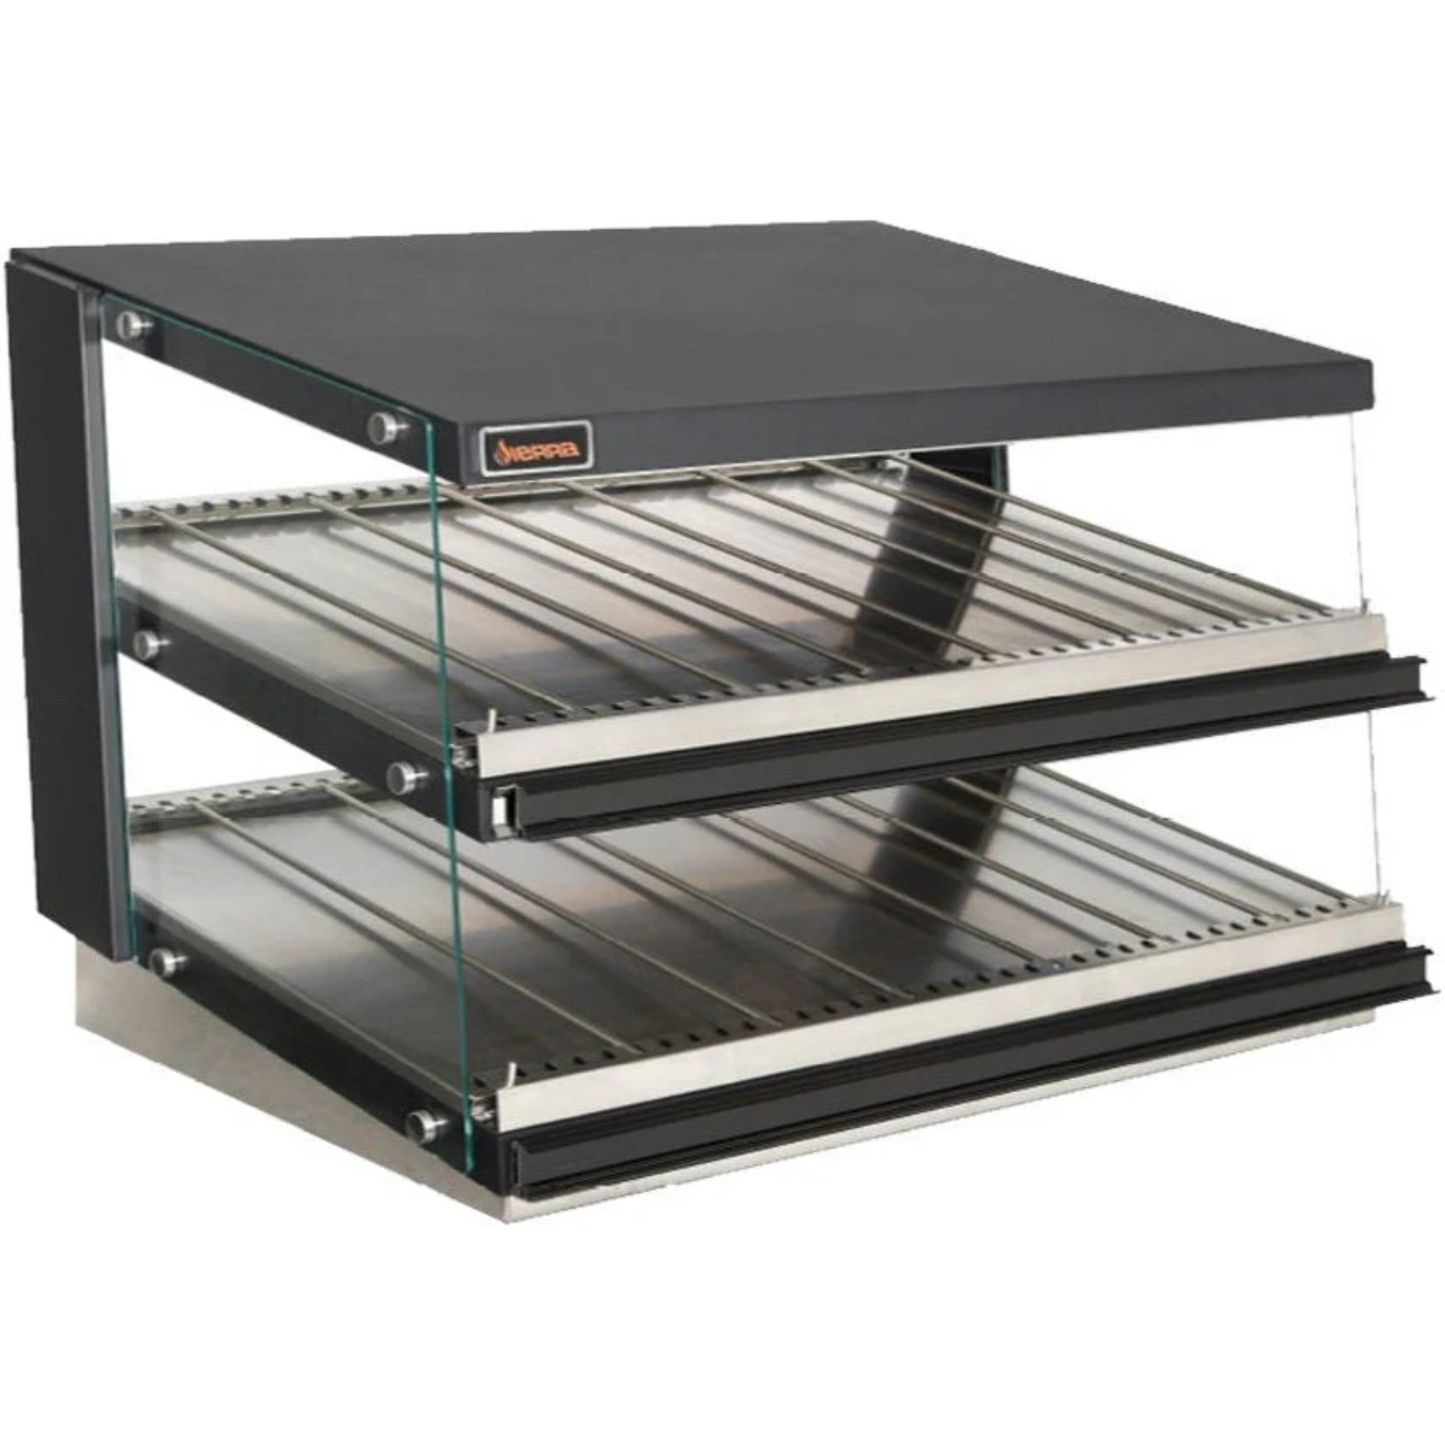 Sierra SHDM-50PT 50" Stainless Steel Heated Display Merchandiser with Glass Slides